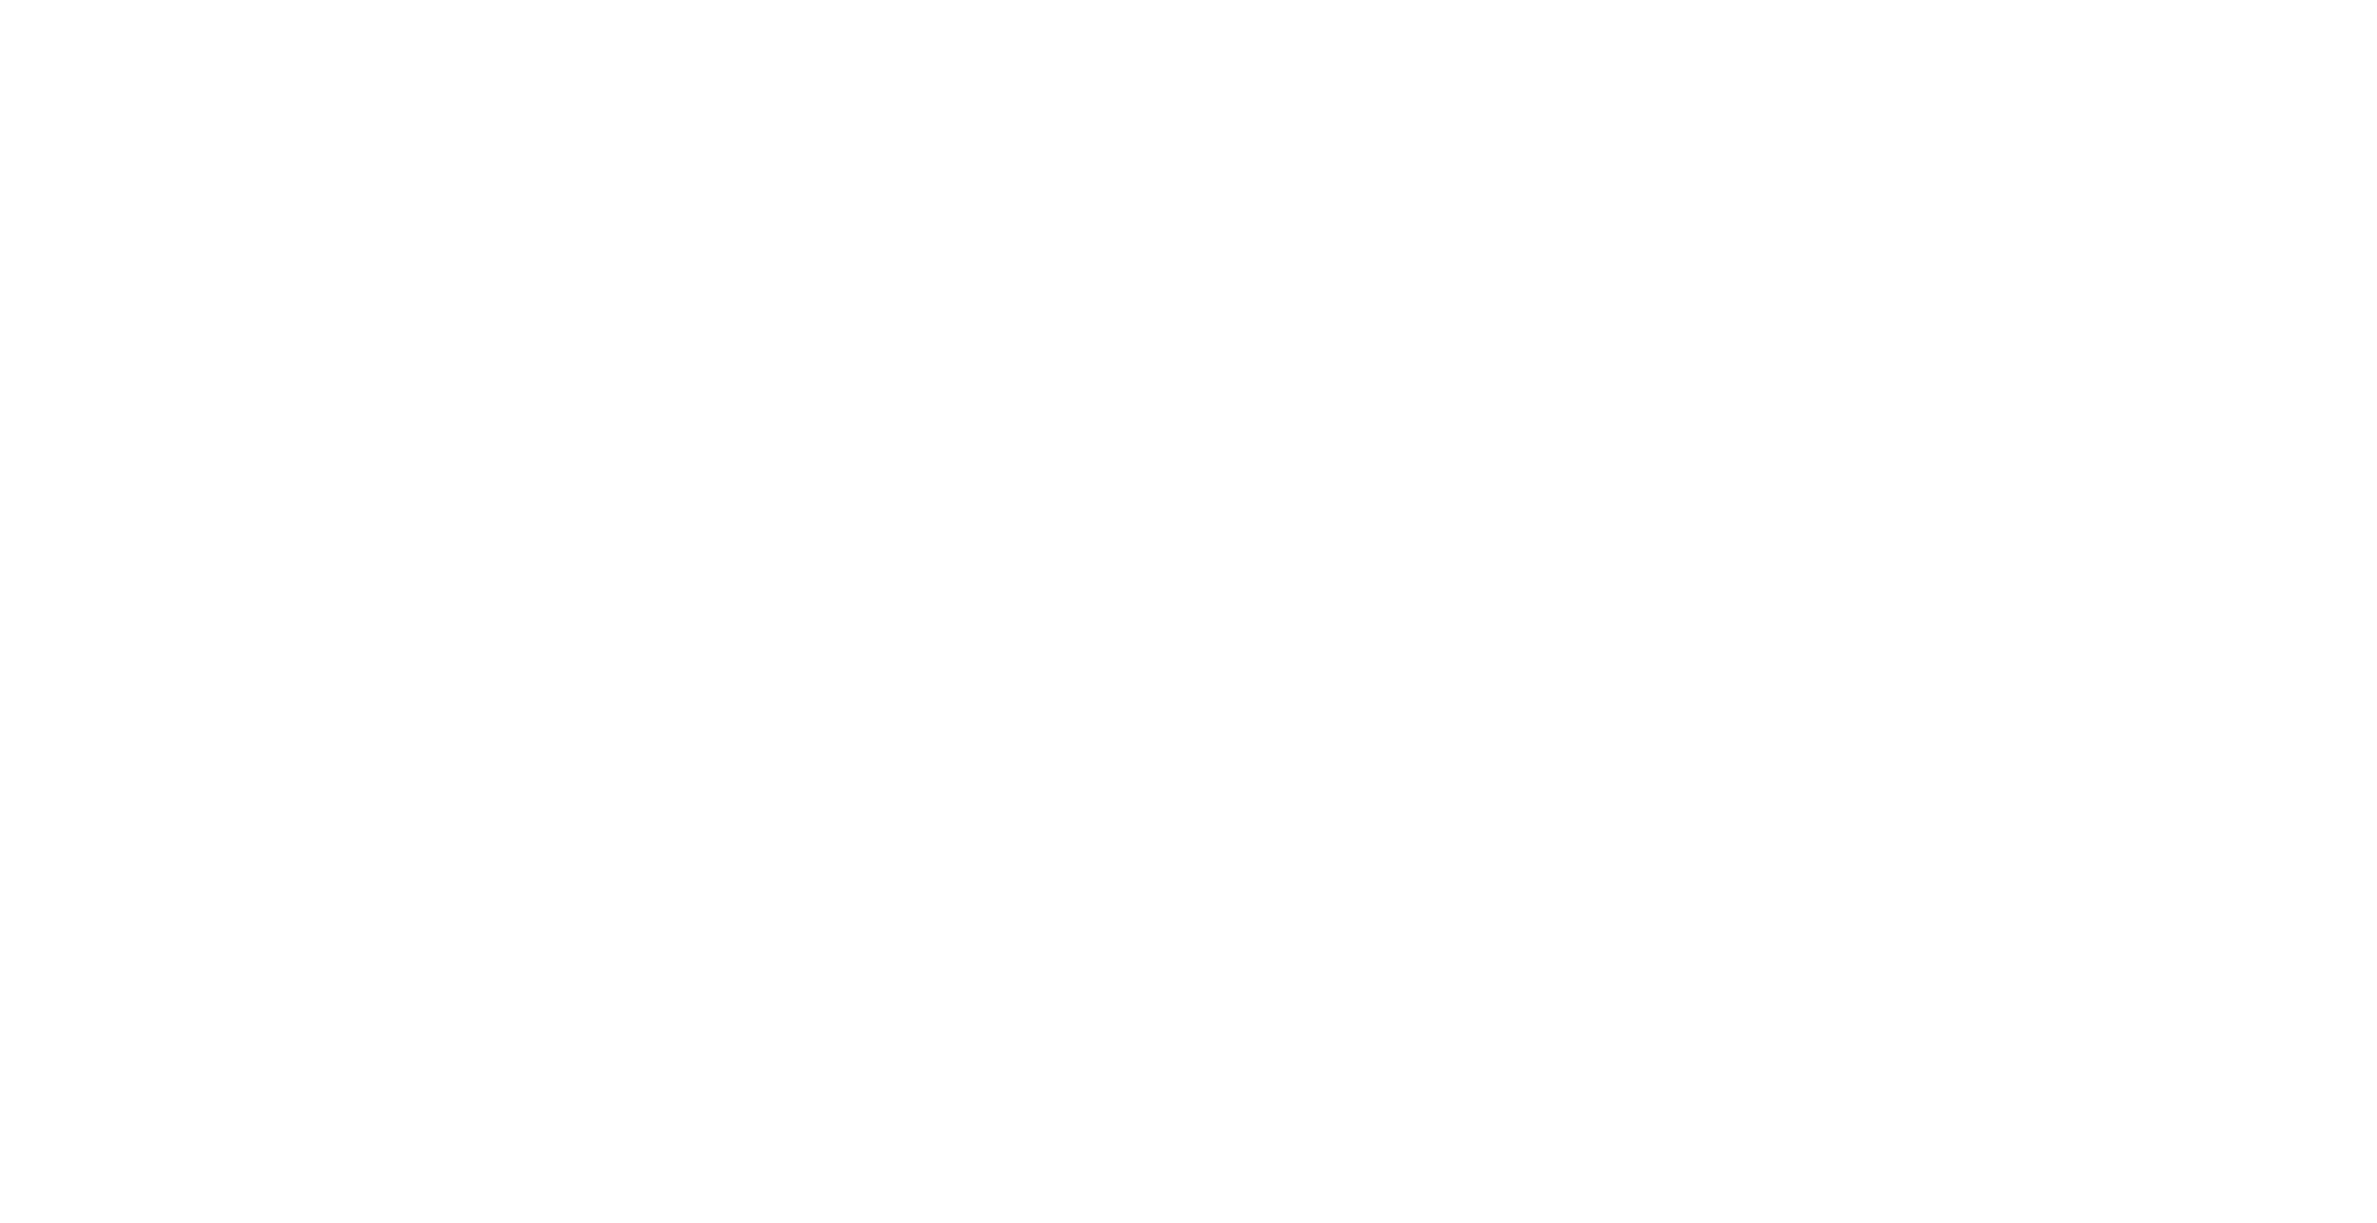 Assistir Royal Crackers - ver séries online